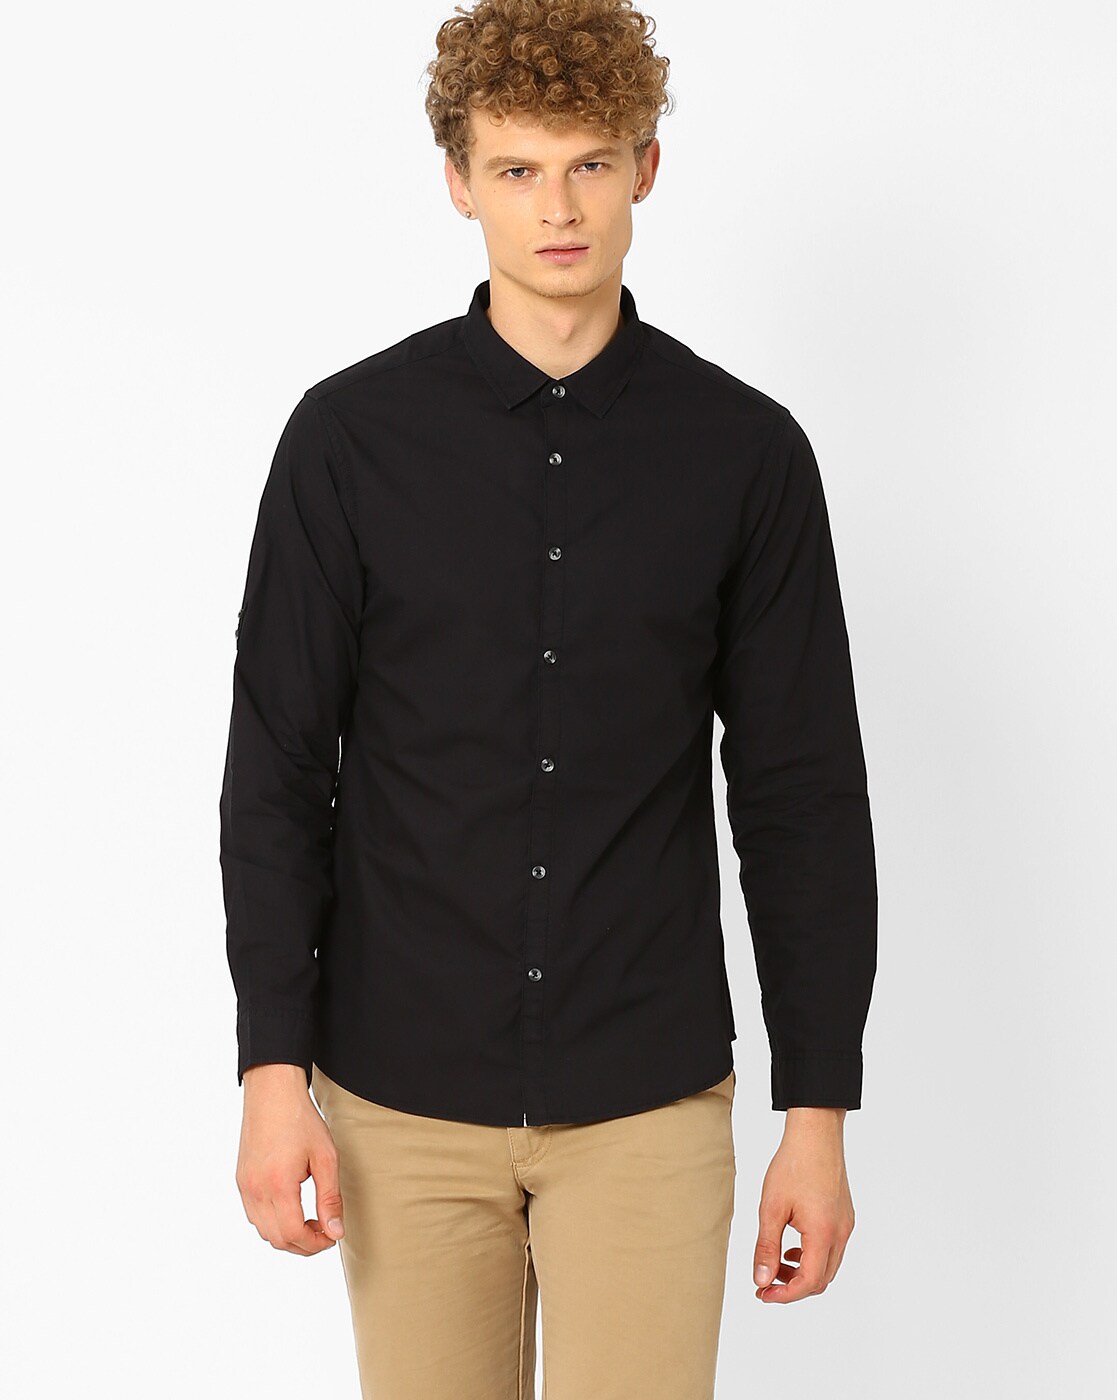 black shirt smart casual